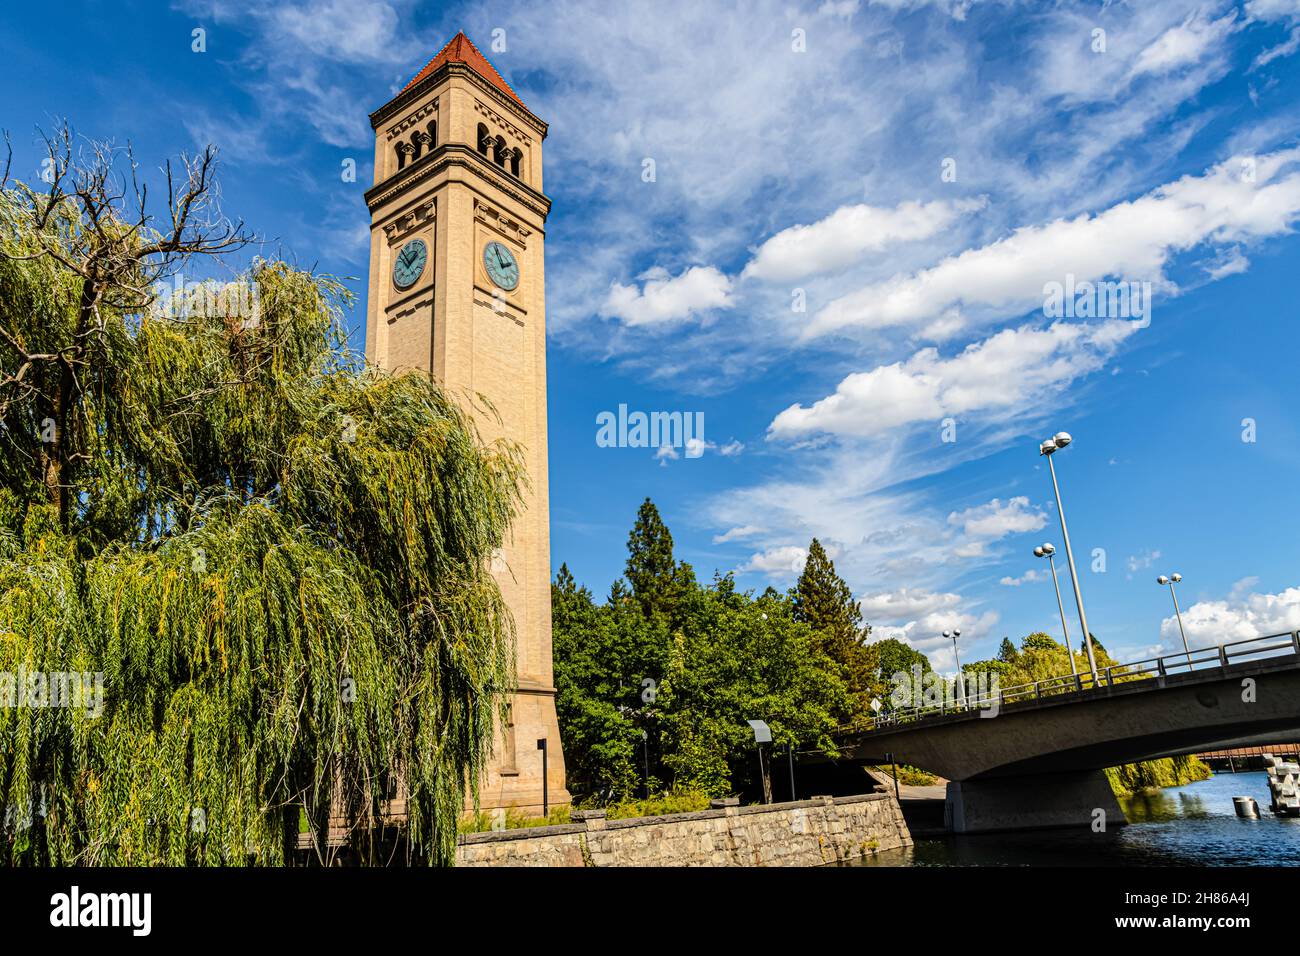 The Great Northern Railroad Clock Tower in Riverfront Park Spokane, Washington, USA Stock Photo